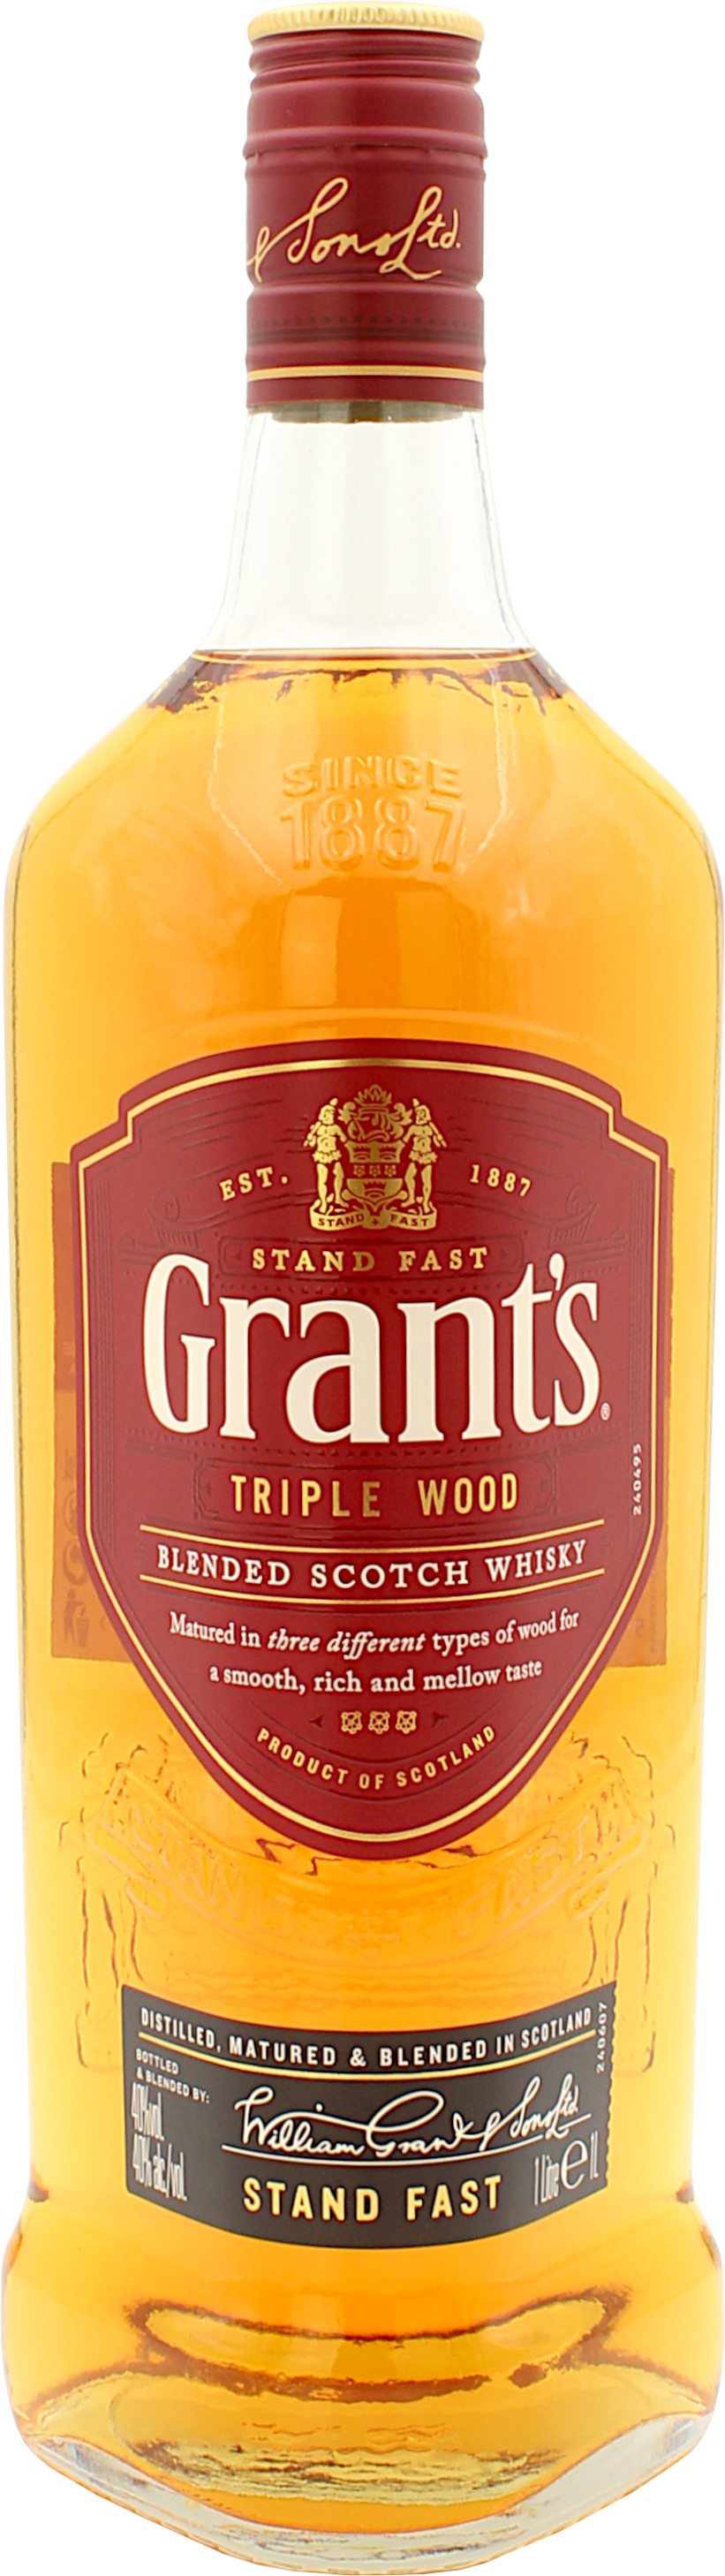 Grant's Triple Wood 40.0% 1 Liter